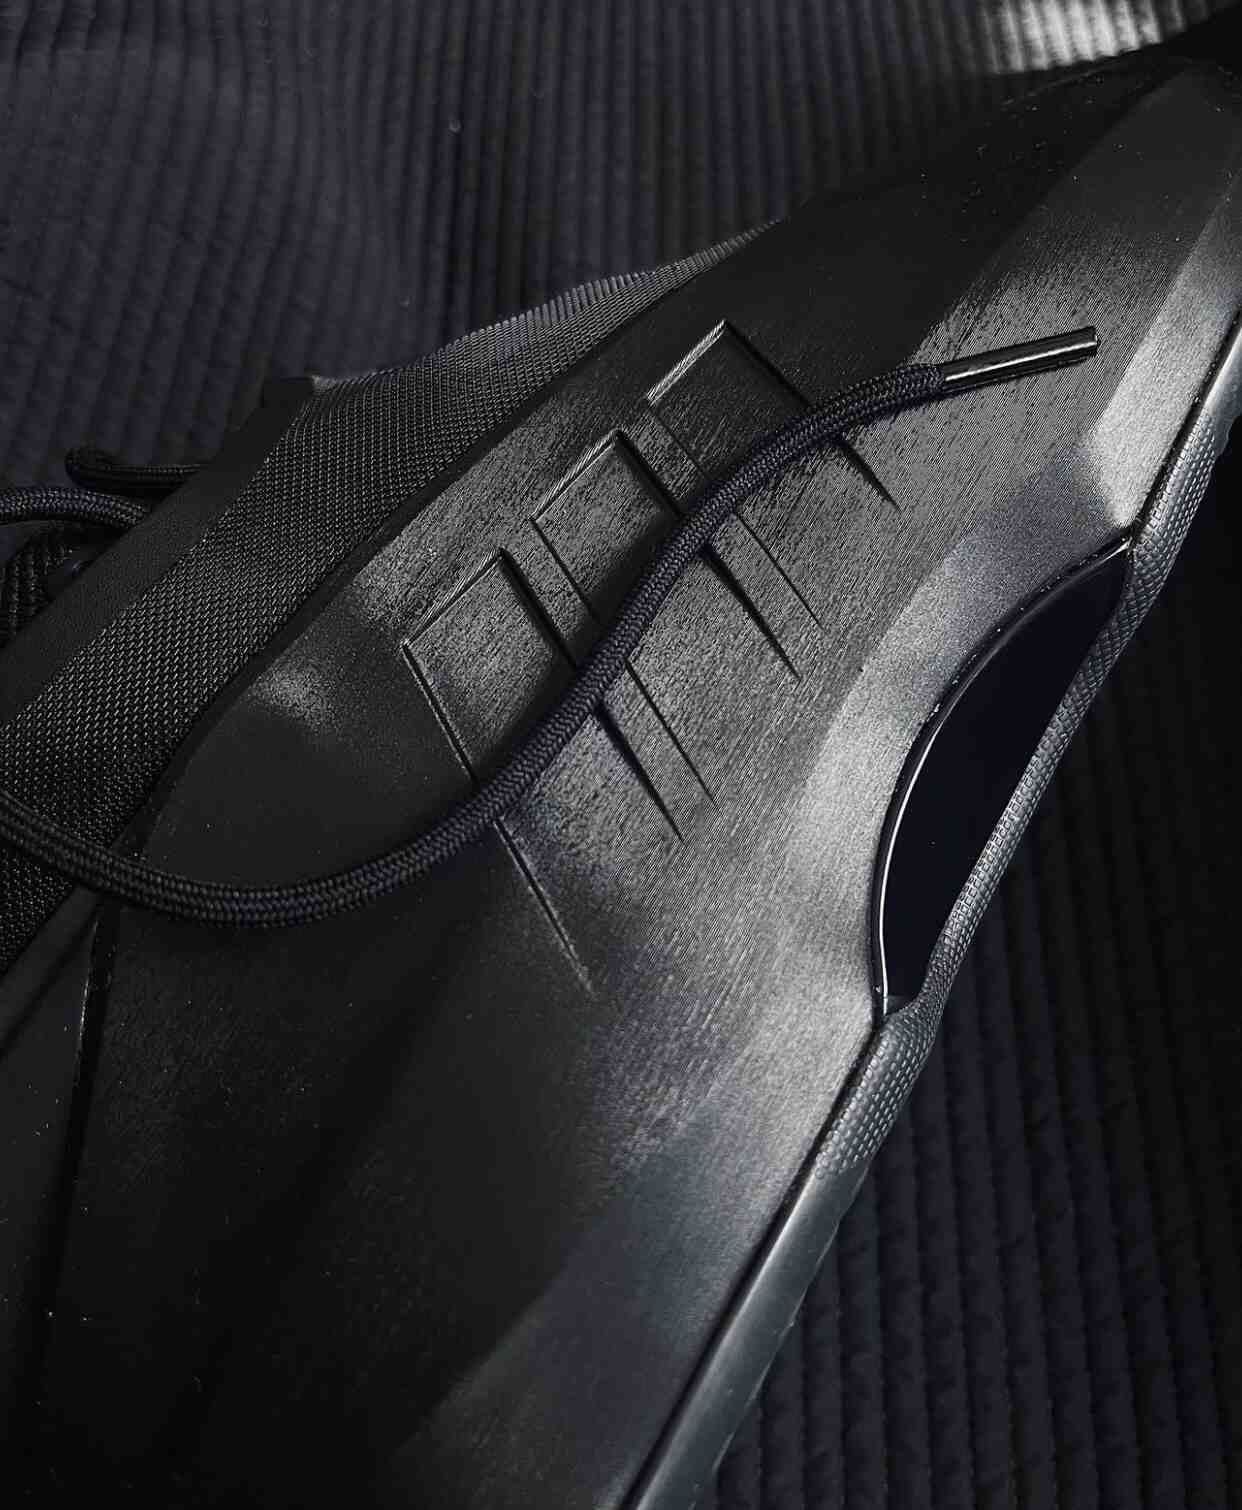 阿迪达斯, 运动鞋, Triple Black, Kobe Bryant, Kobe, Black, adidas Crazy IIInfinity, Adidas - 阿迪达斯 Crazy IIInfinity "三重黑 "10 月 15 日发售